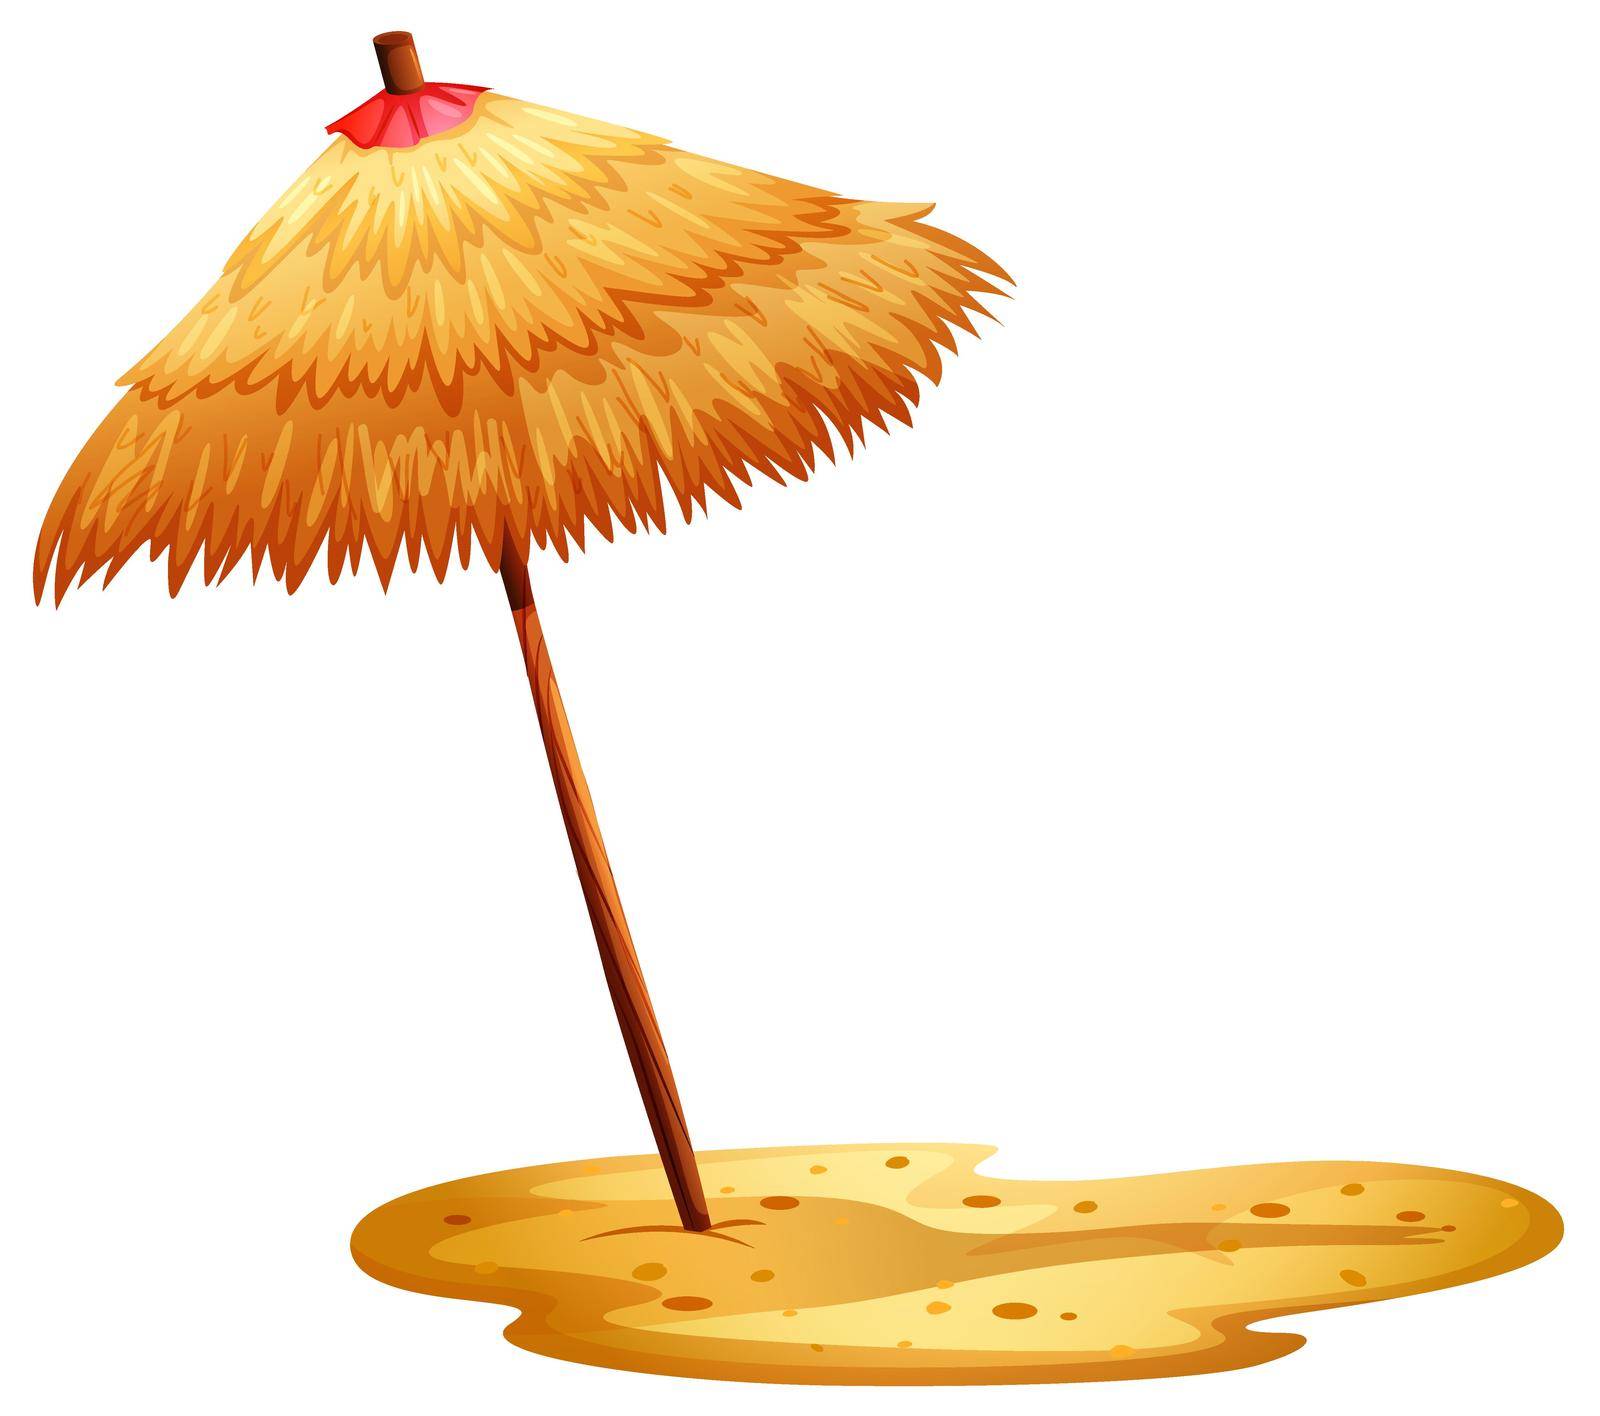 A beach umbrella by iimages